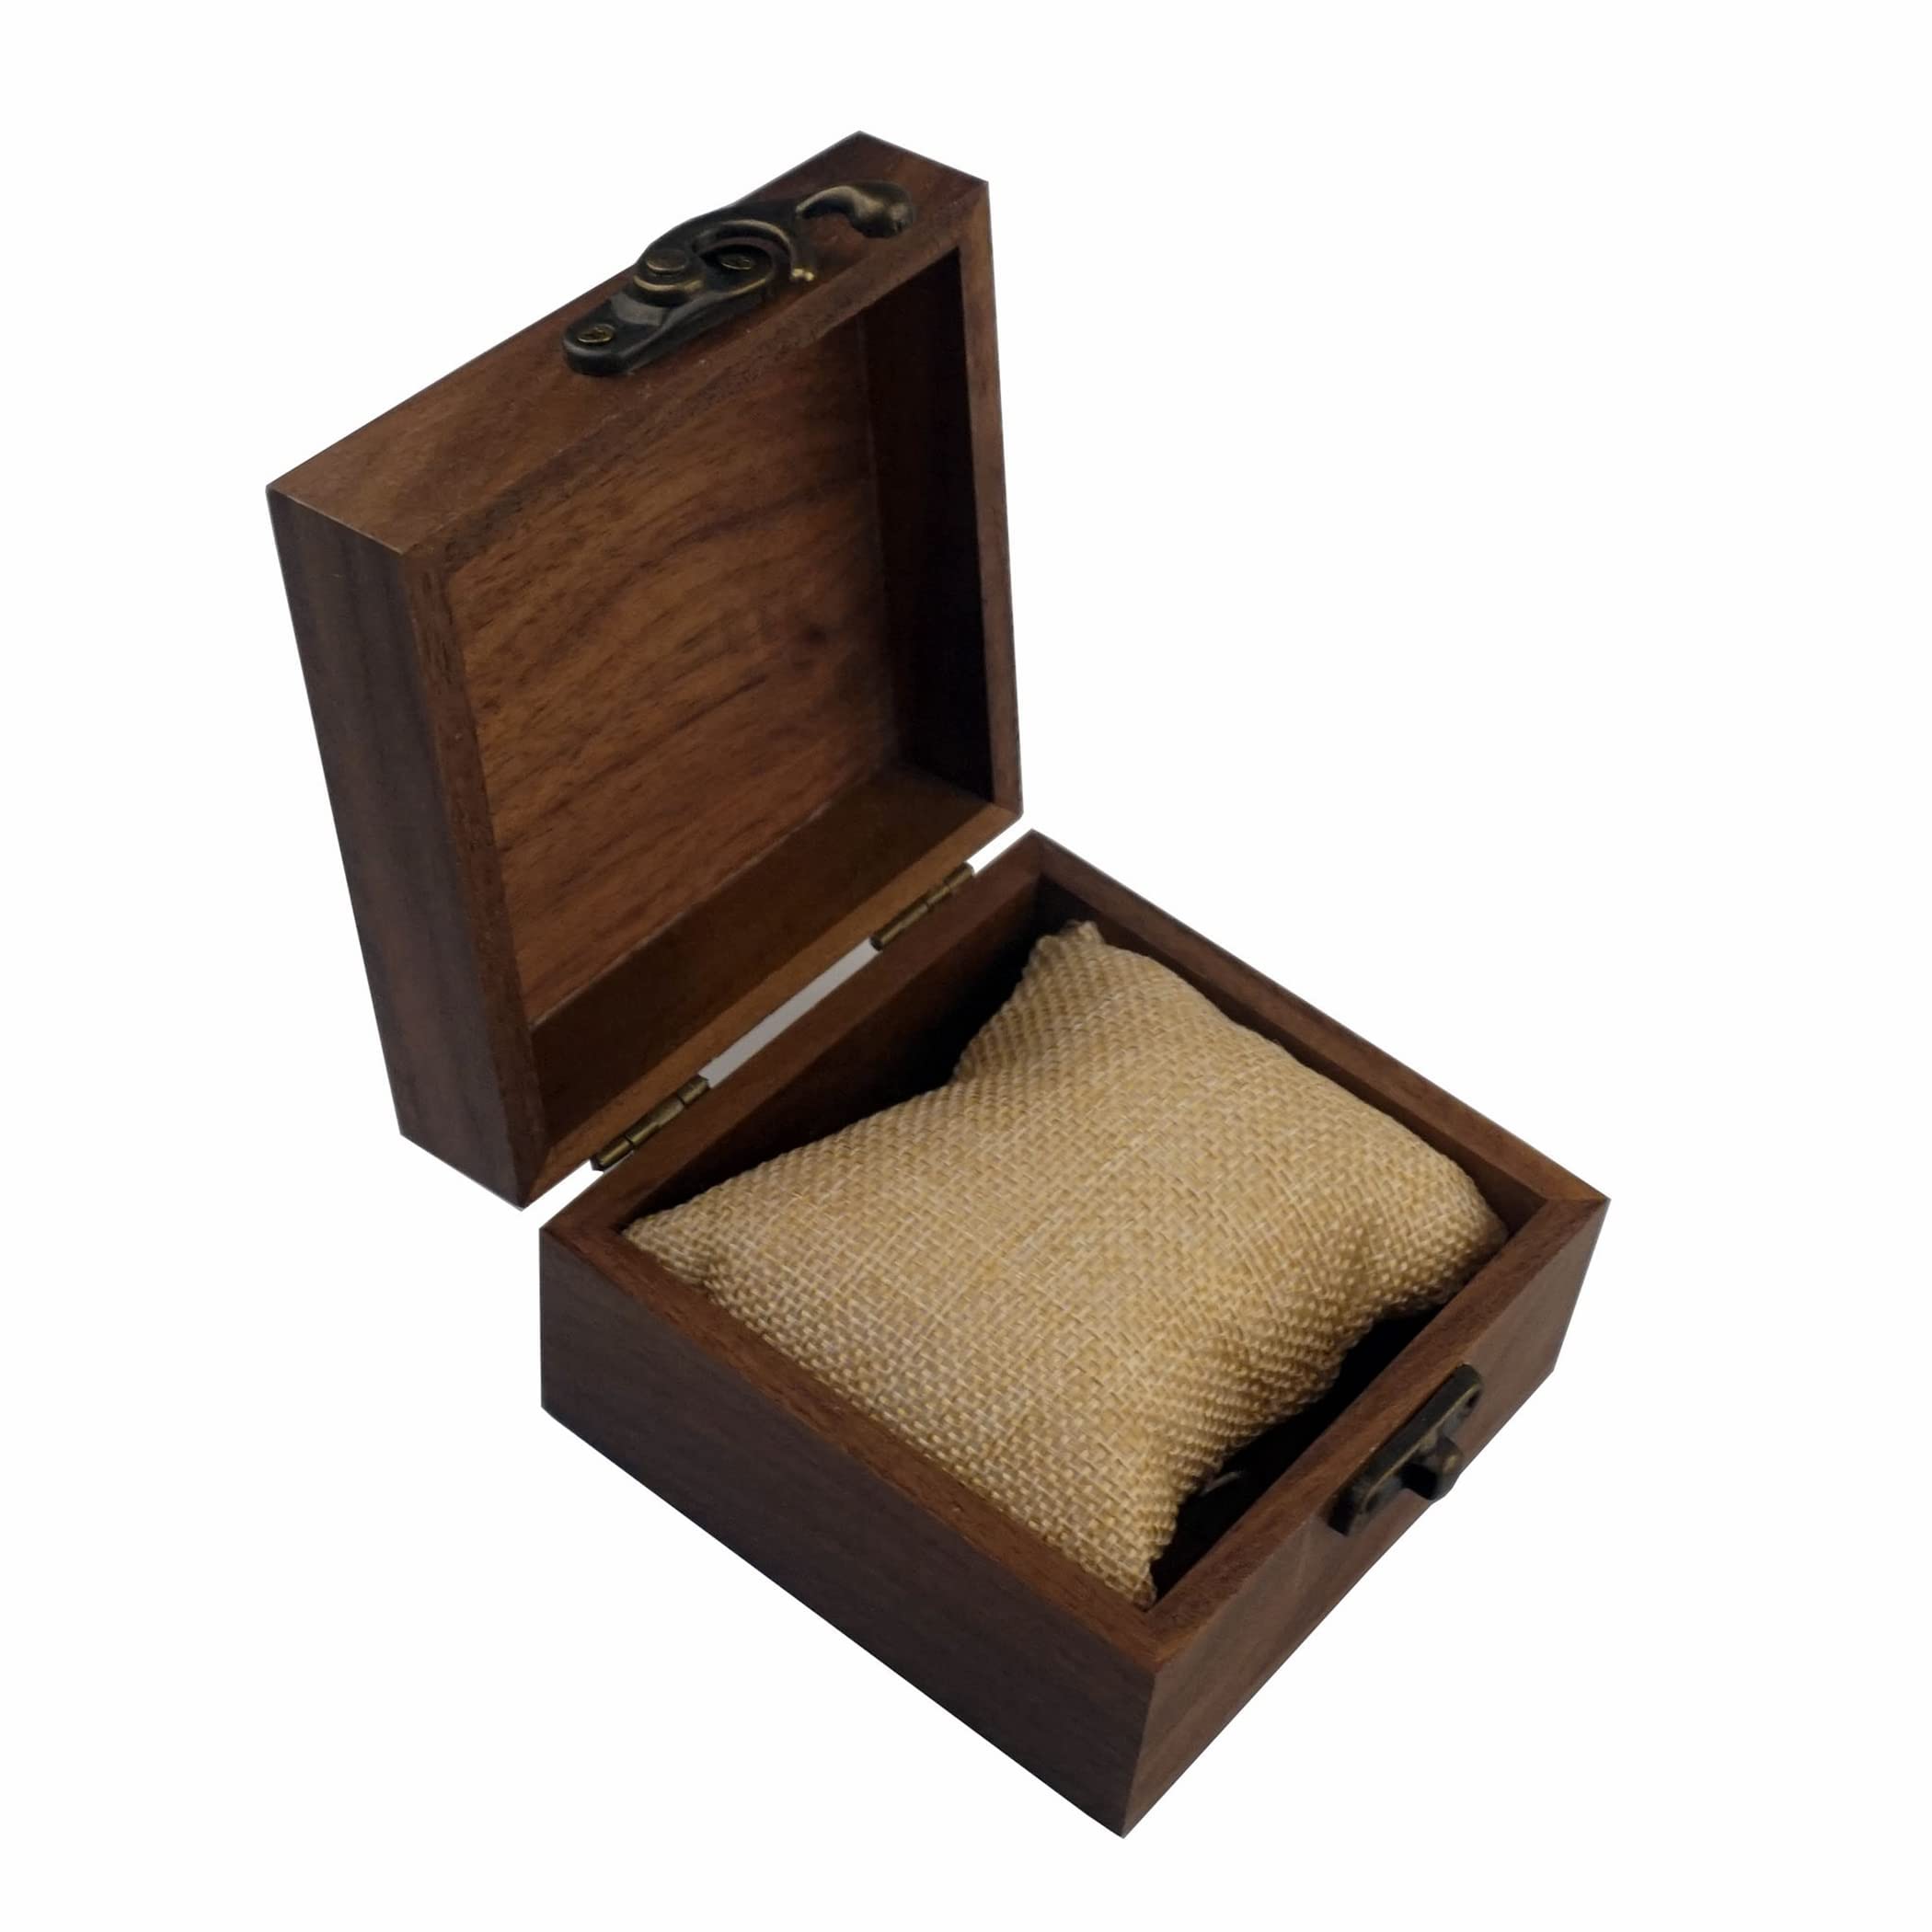 Shangrun Walnut Wood Box for Crafts